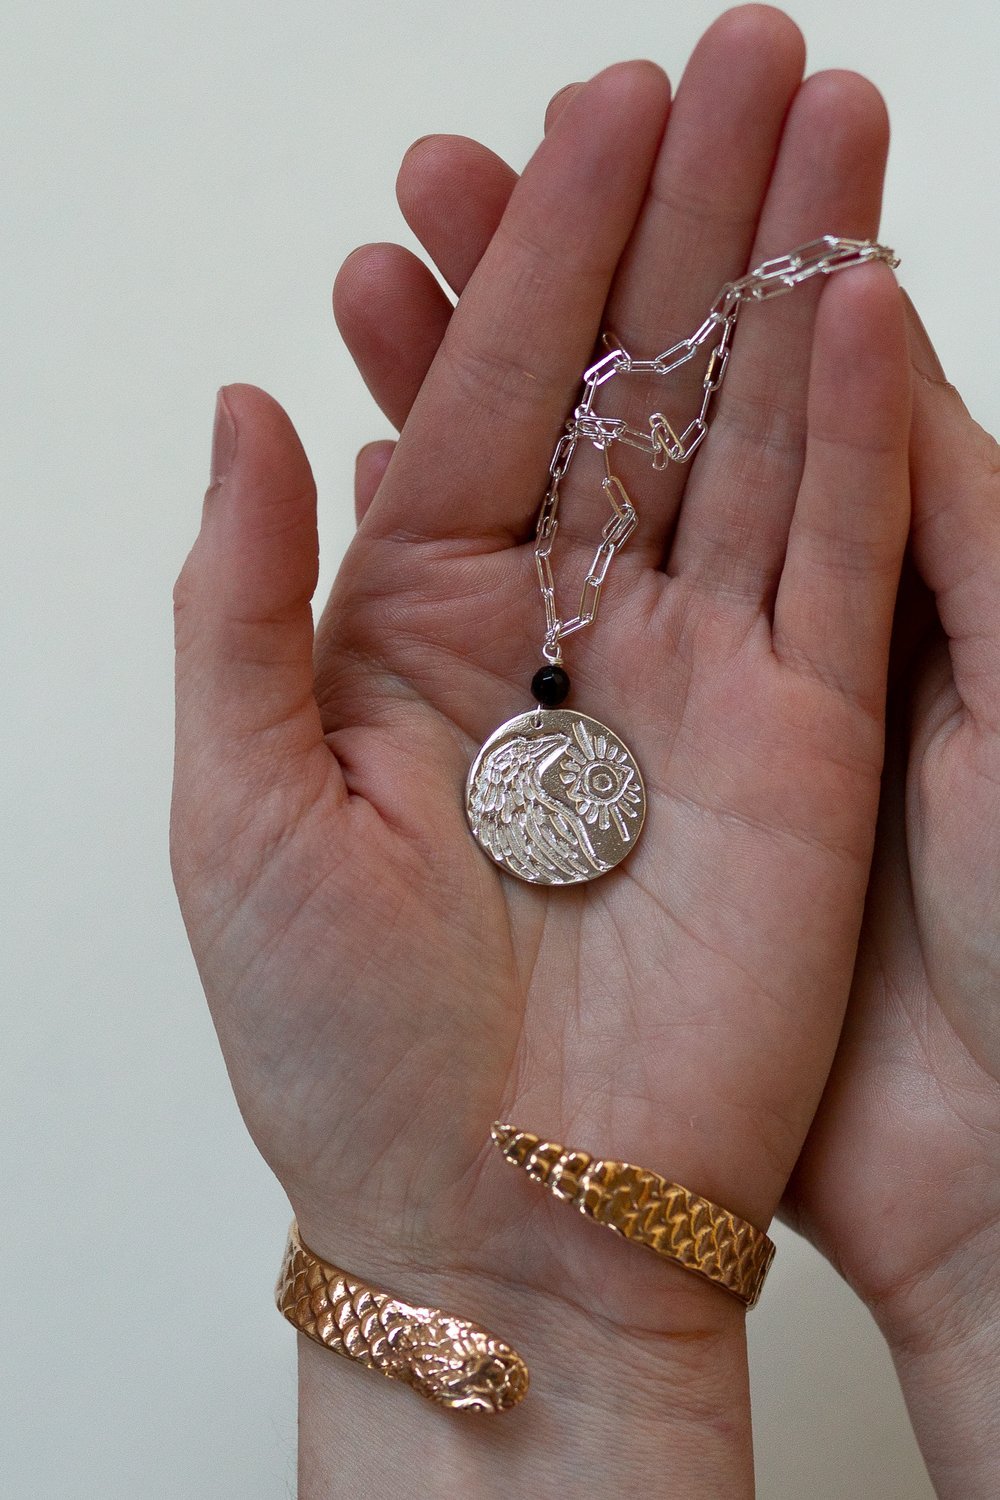 Seven Charm bracelet - Moon, Saturn, Tree Charms - Folklore Jewelry